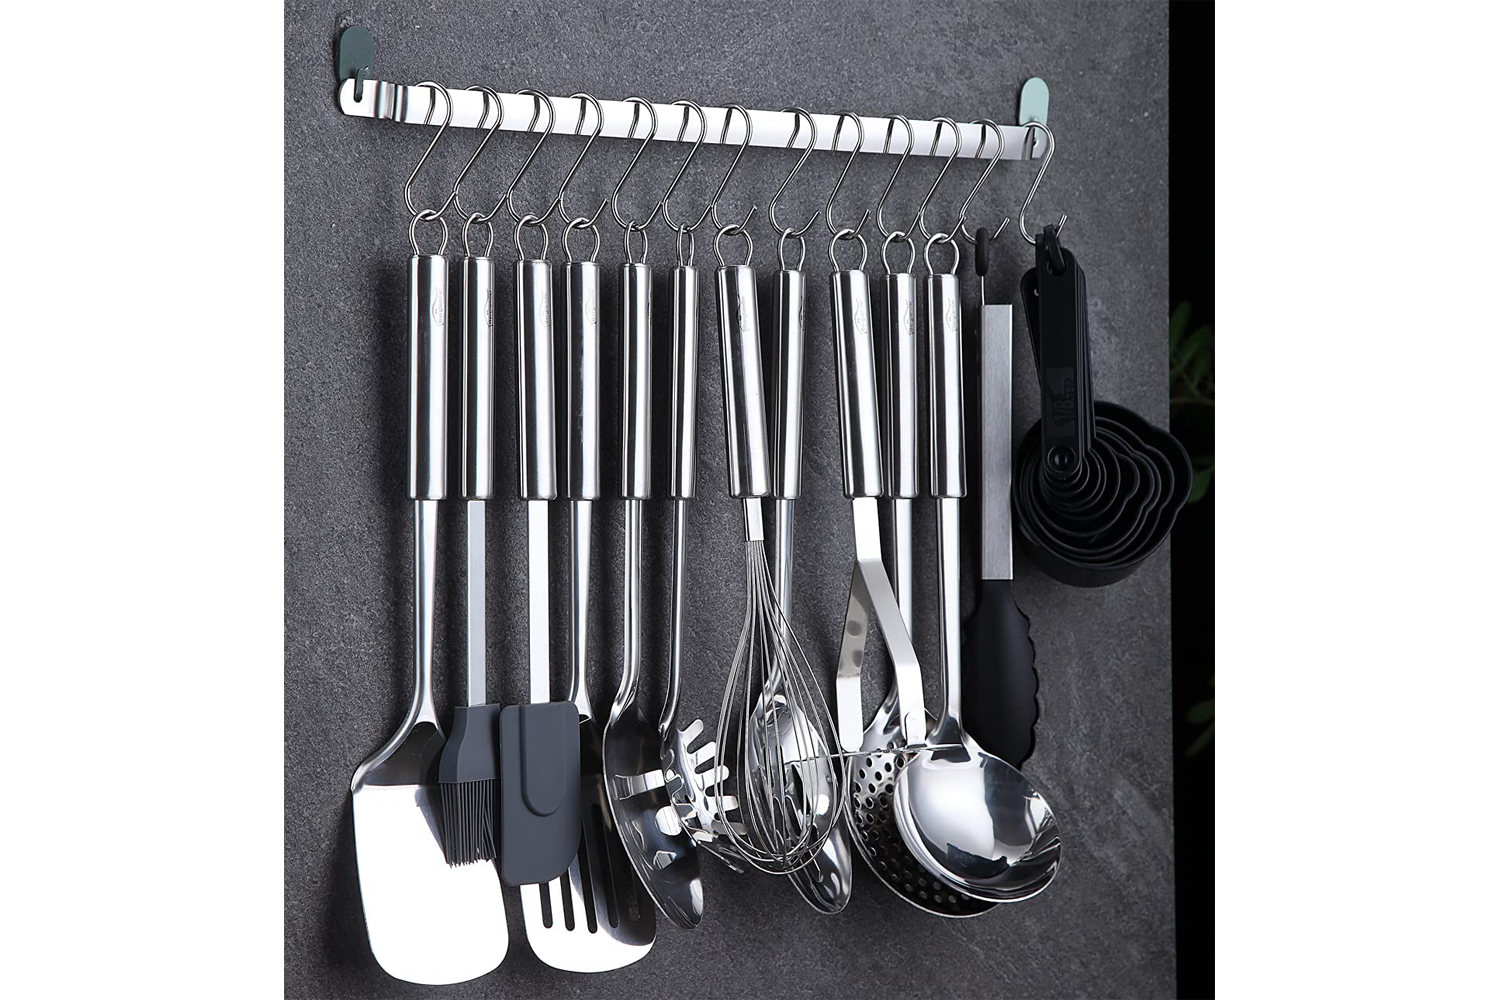 https://www.themanual.com/wp-content/uploads/sites/9/2021/09/berglander-38-piece-kitchen-utensils-set.jpg?fit=800%2C800&p=1